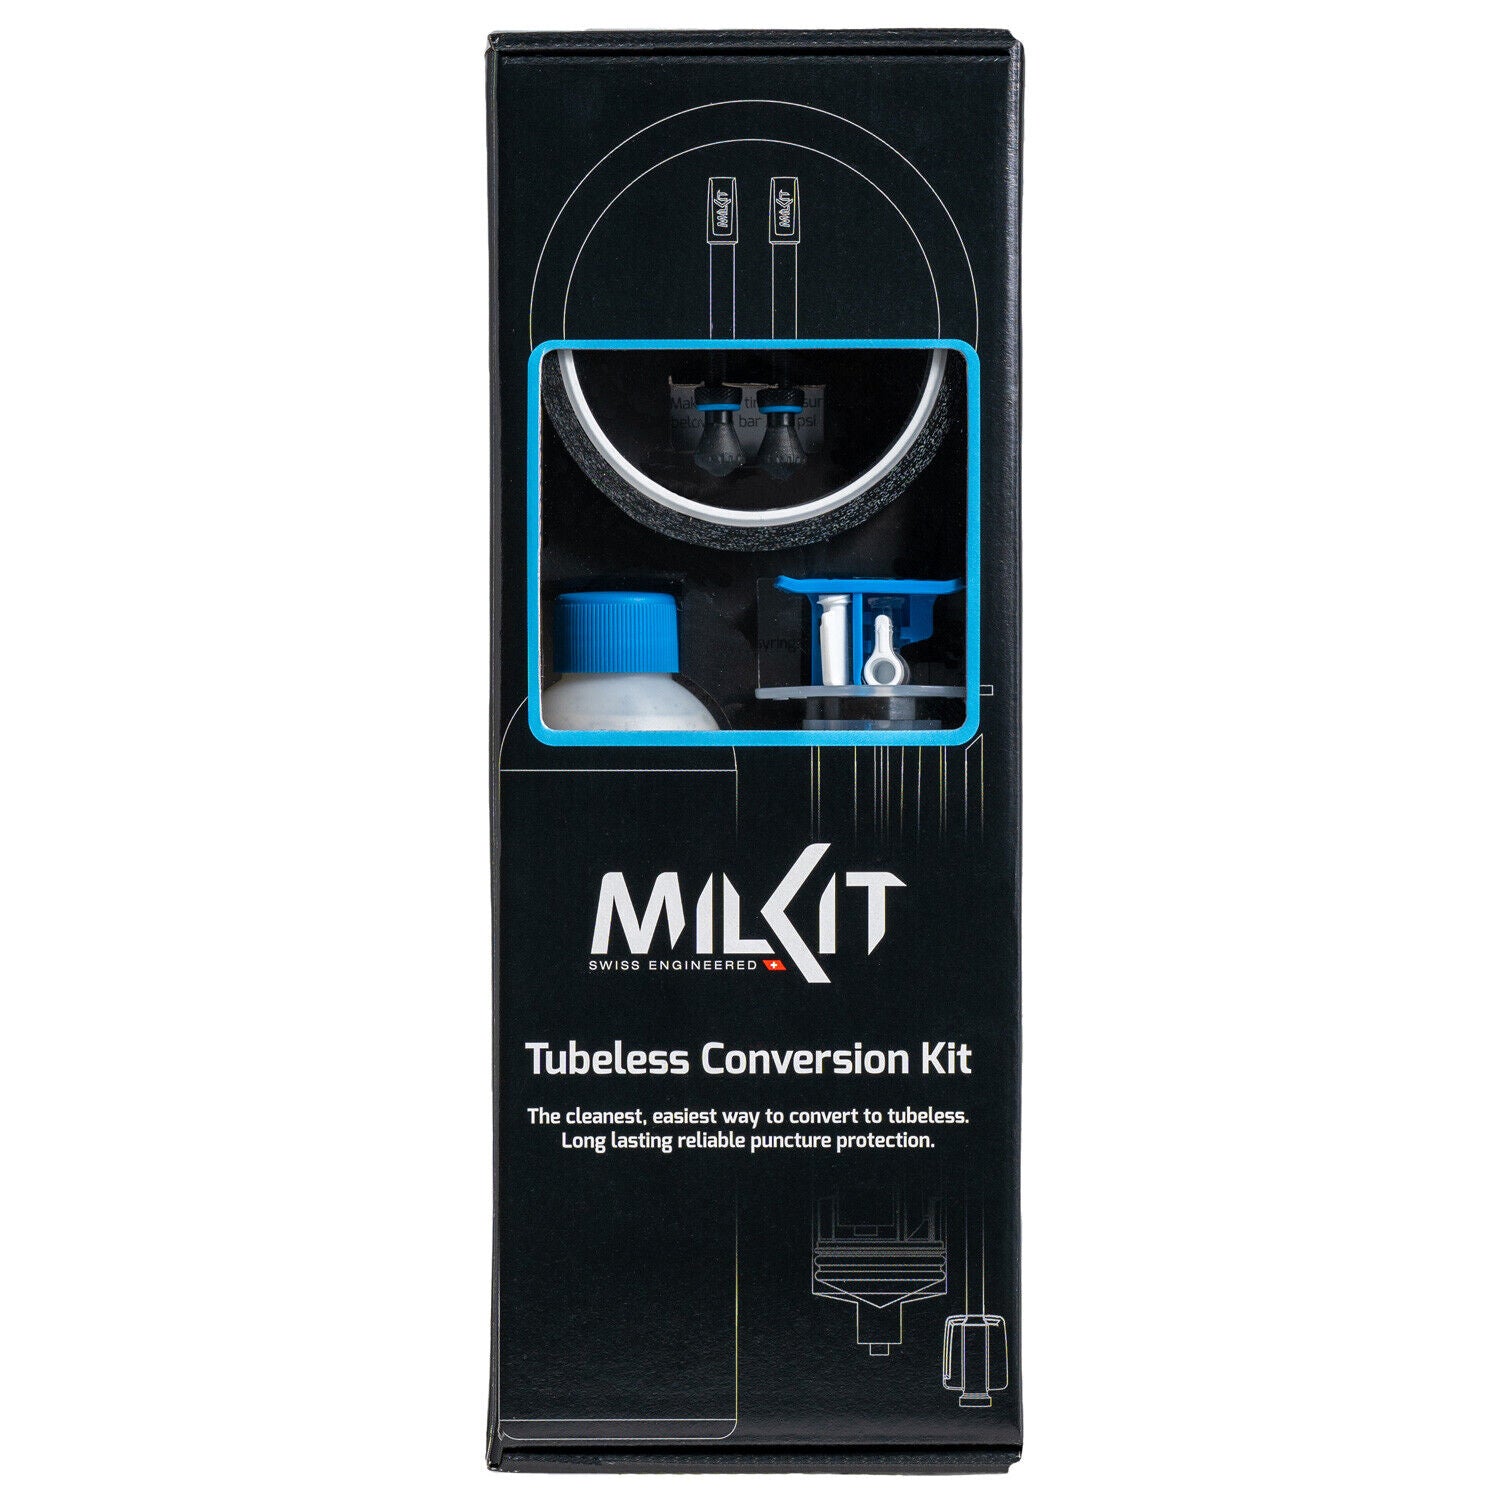 milKit Tubeless Conversion Kit - 45mm Valves - Choose Rim Tape Width - Sportandleisure.com